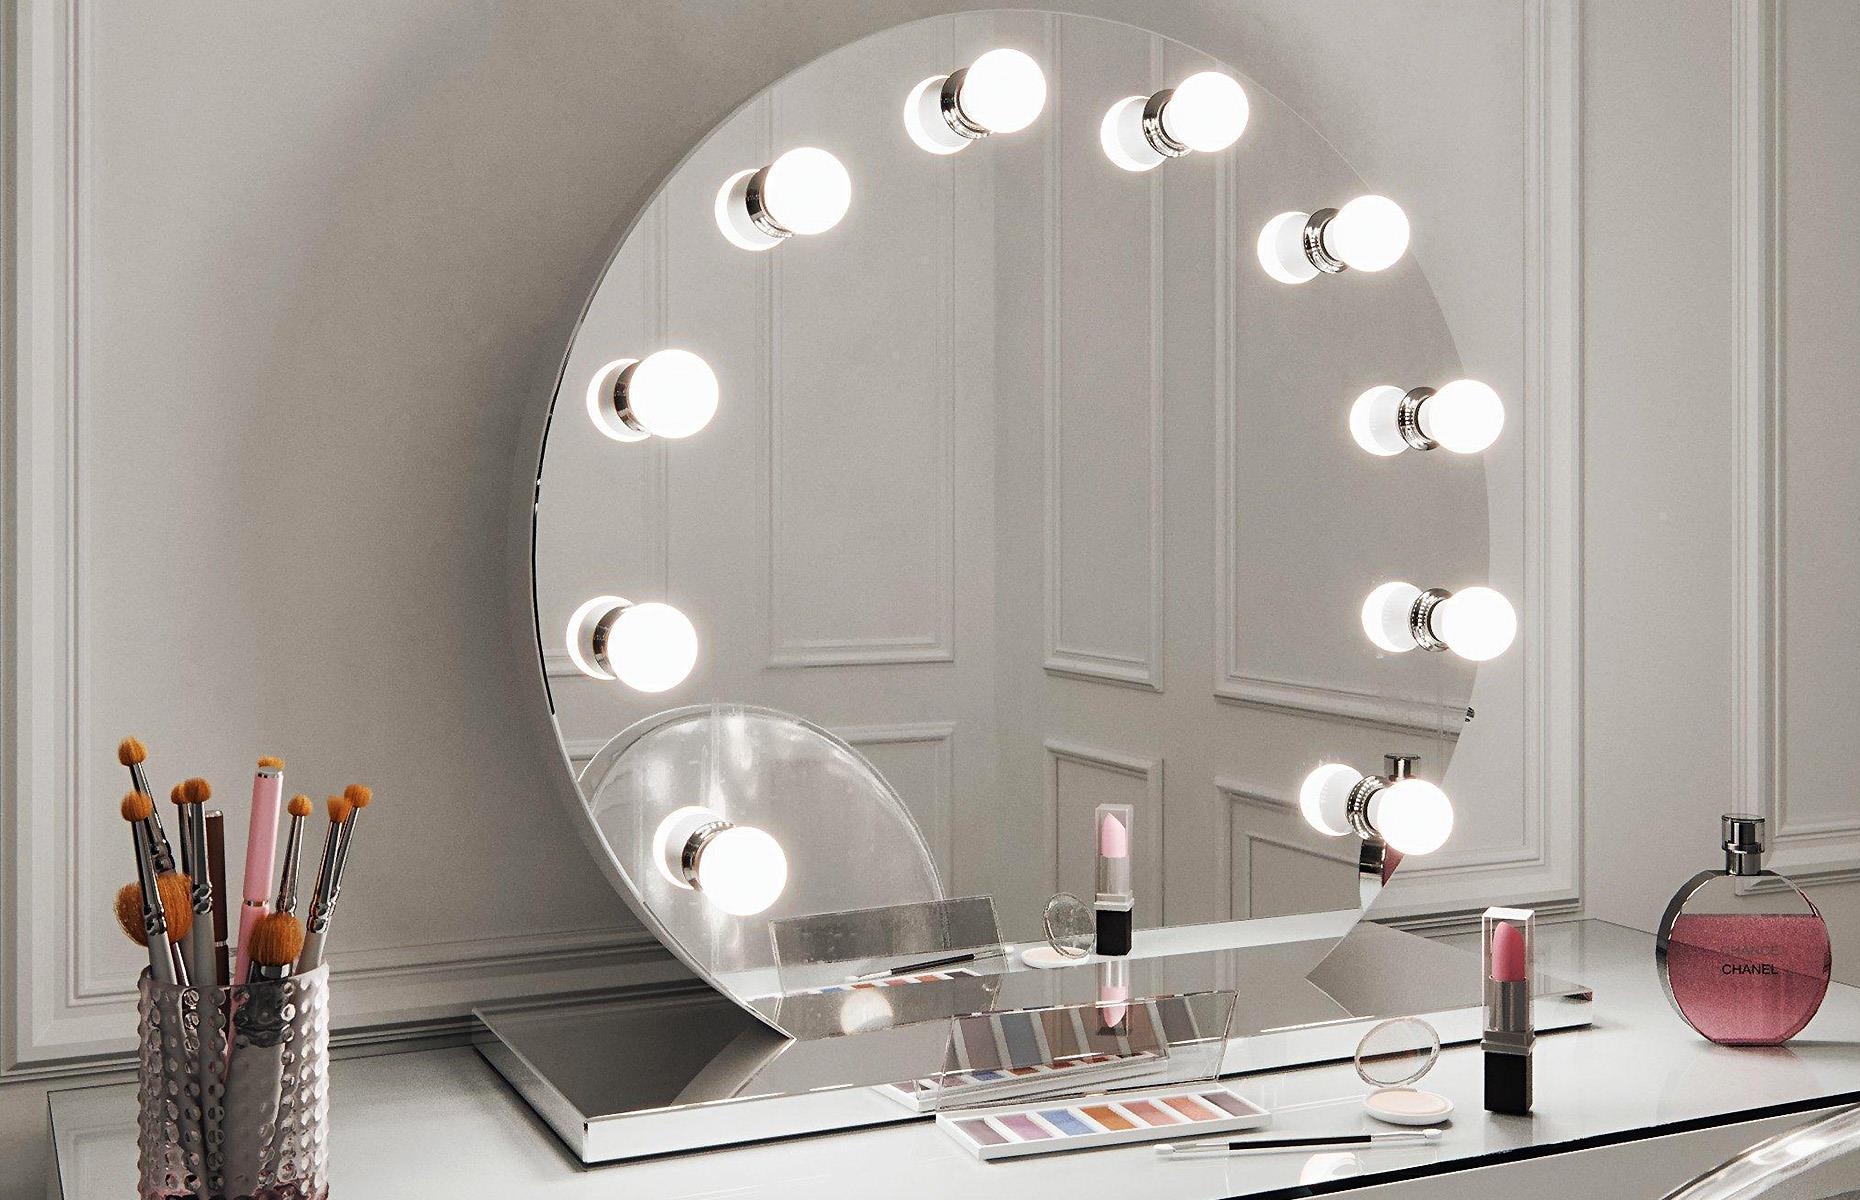 Light up a vanity mirror